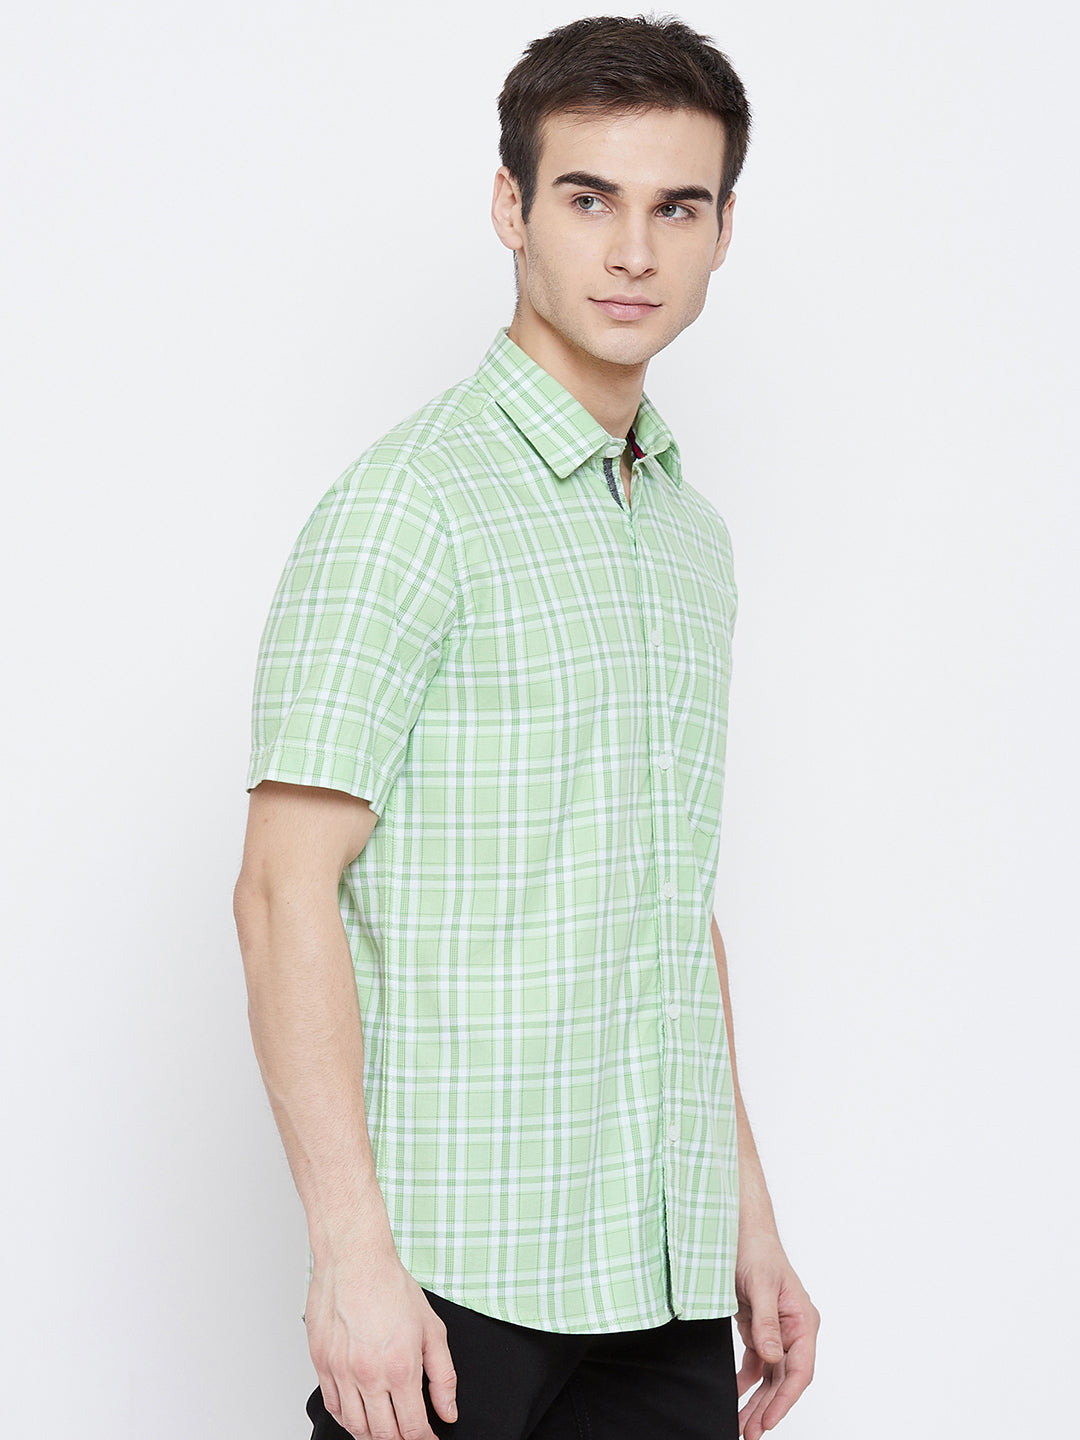 Mint Green Checked Spread Collar Slim Fit Shirt - Men Shirts